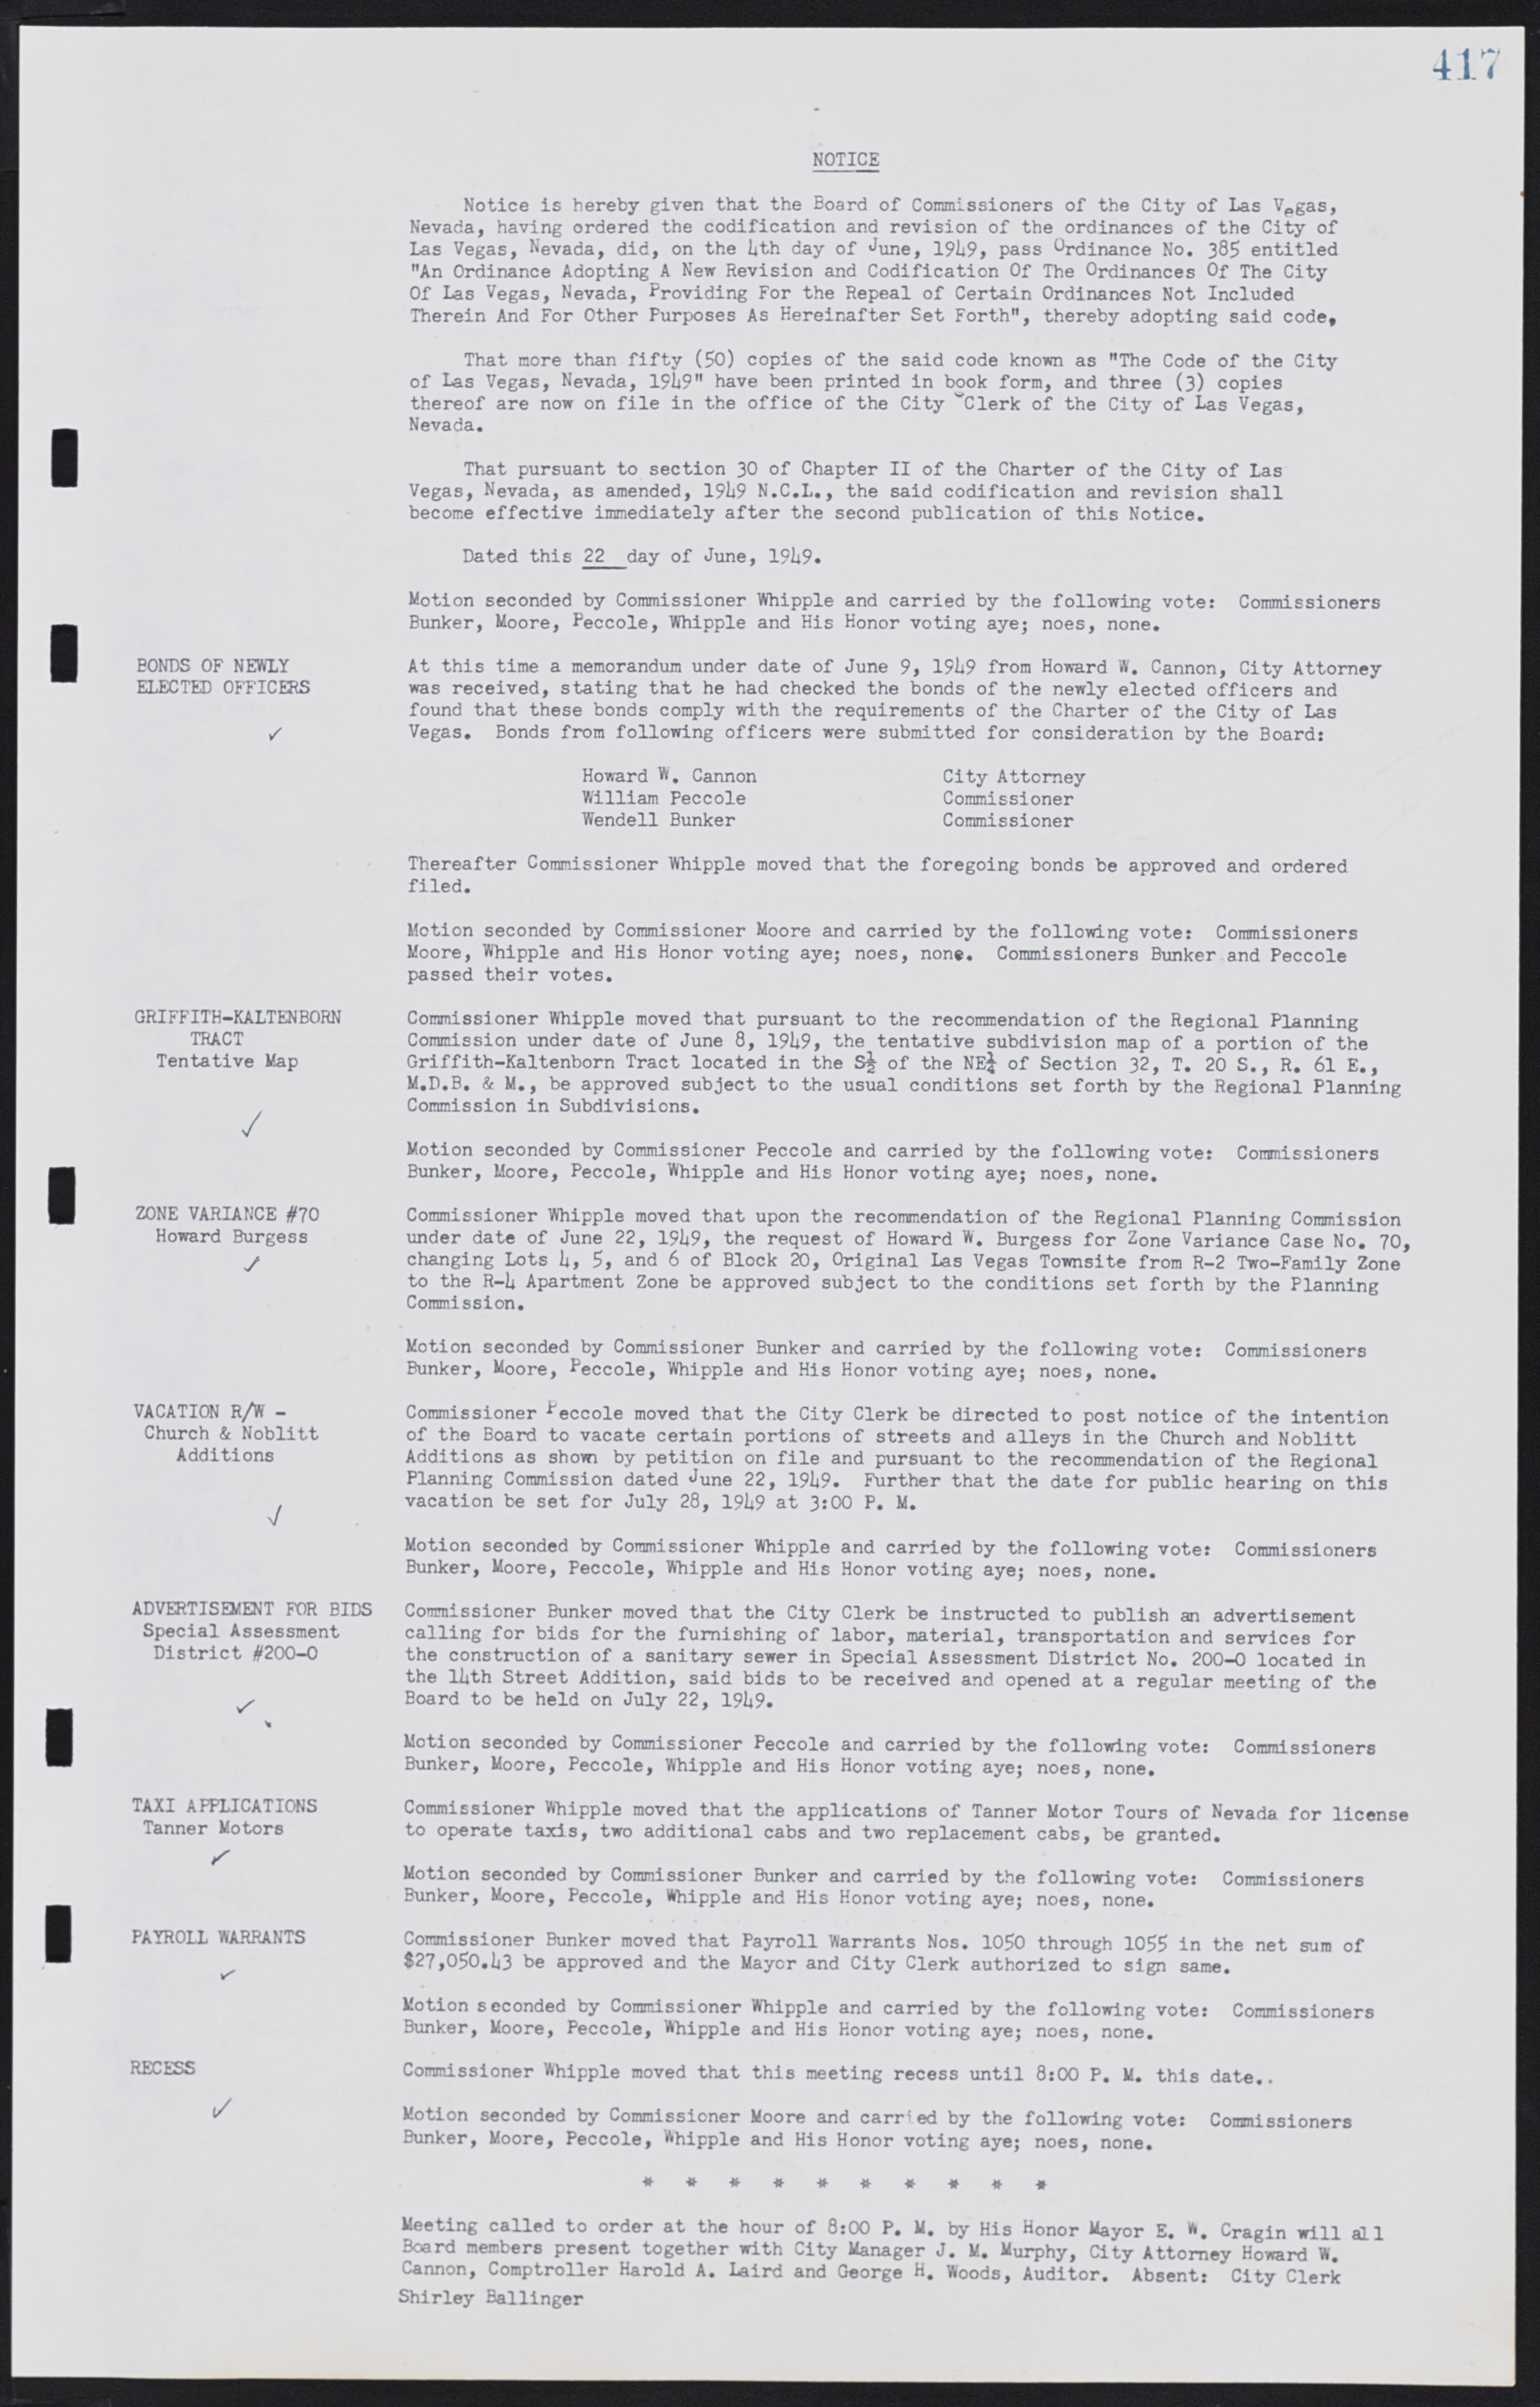 Las Vegas City Commission Minutes, January 7, 1947 to October 26, 1949, lvc000006-447